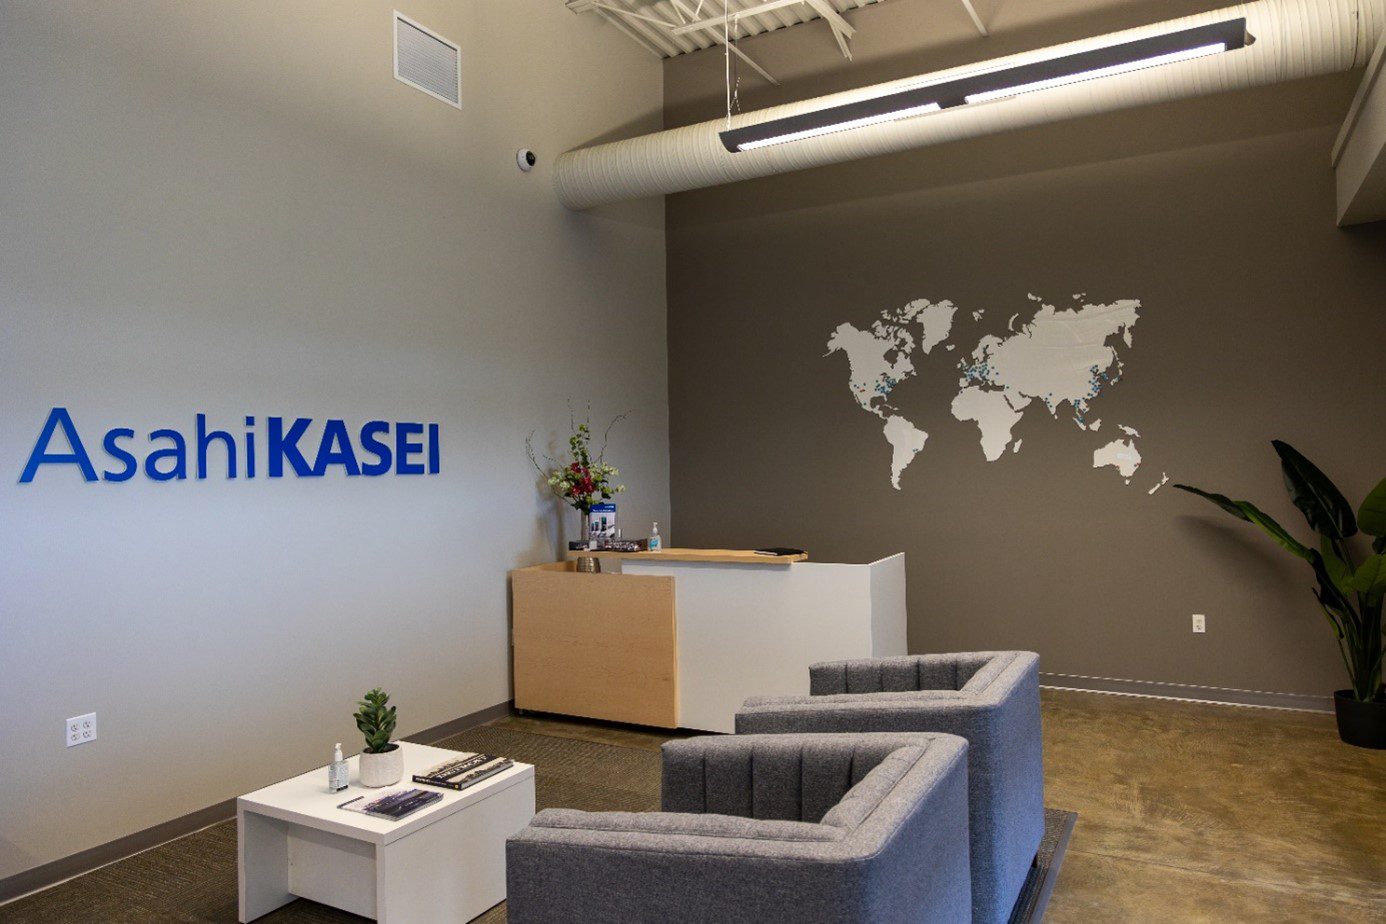 Asahi Kasei's new office in Novi